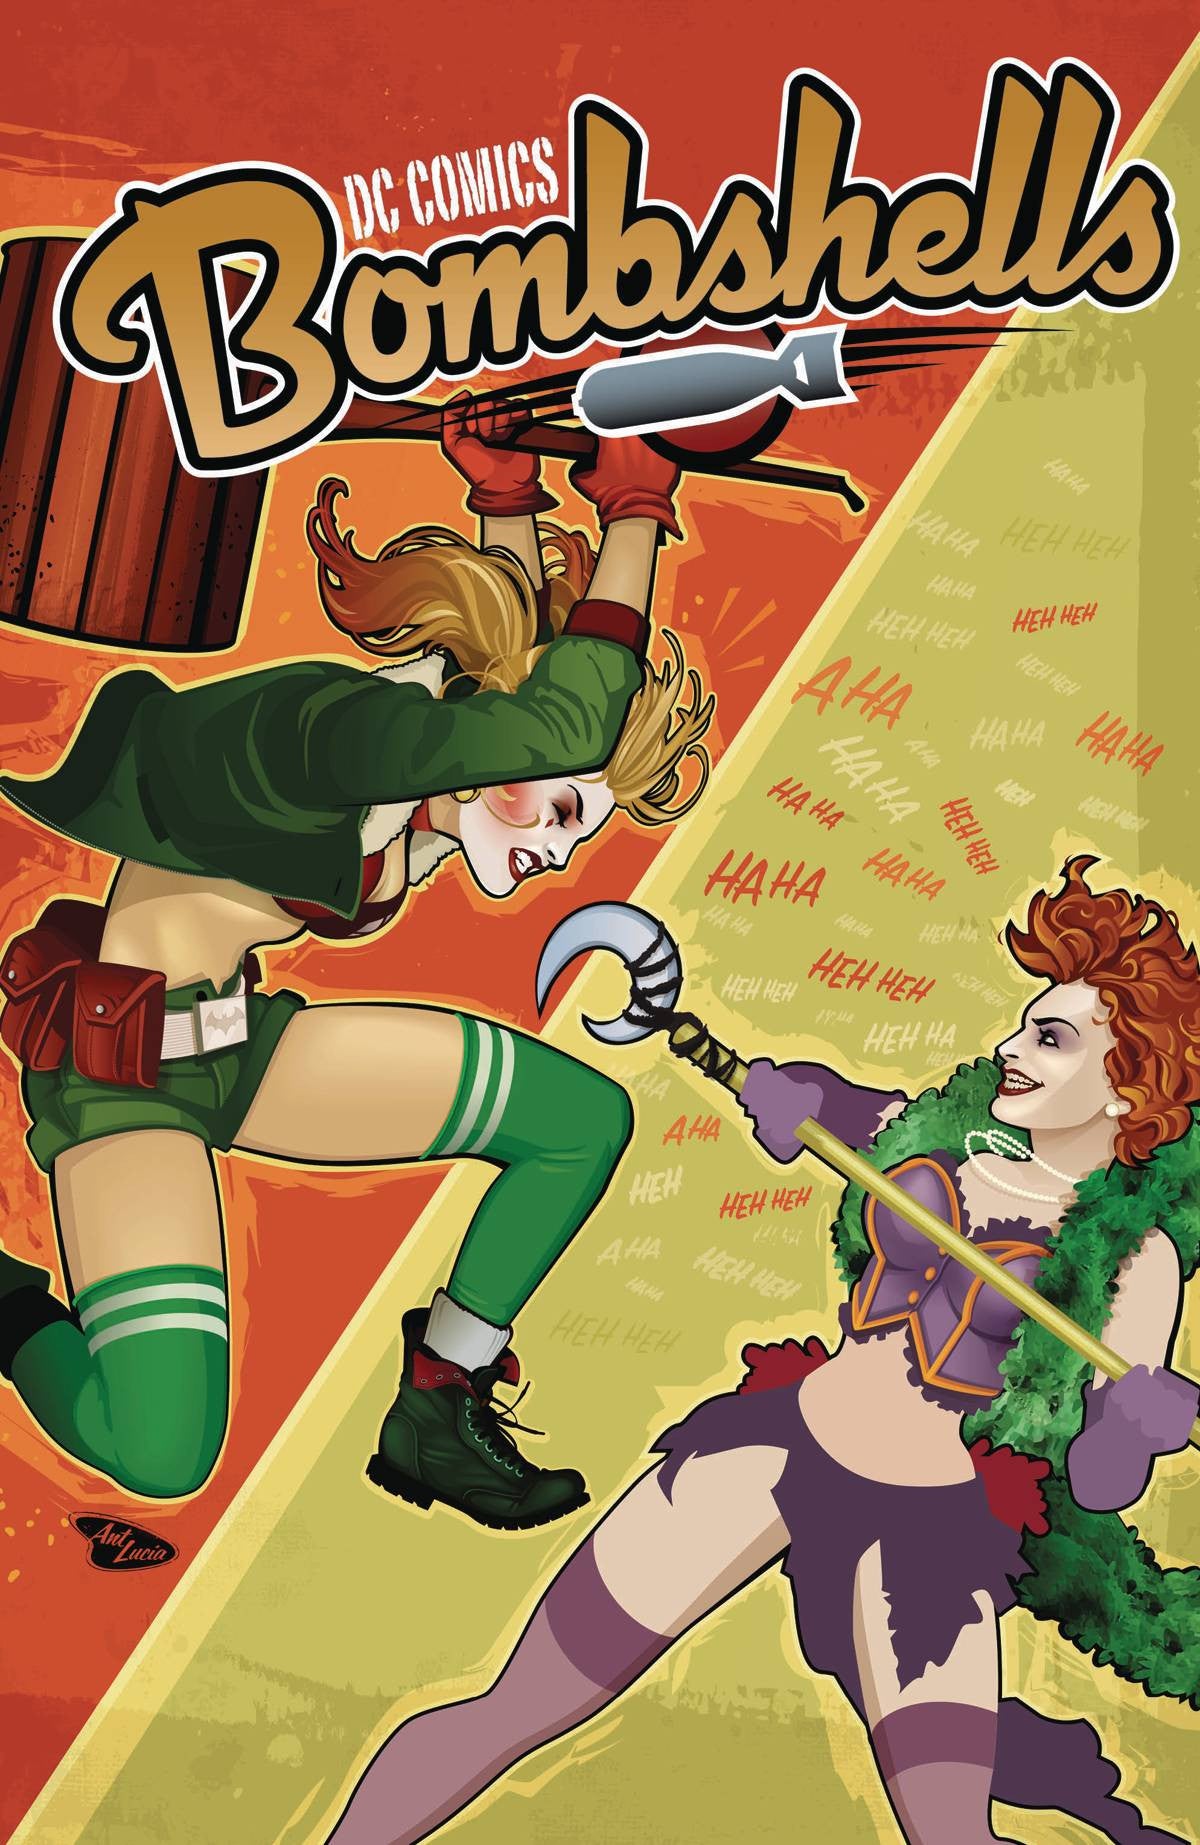 DC COMICS BOMBSHELLS #14 COVER